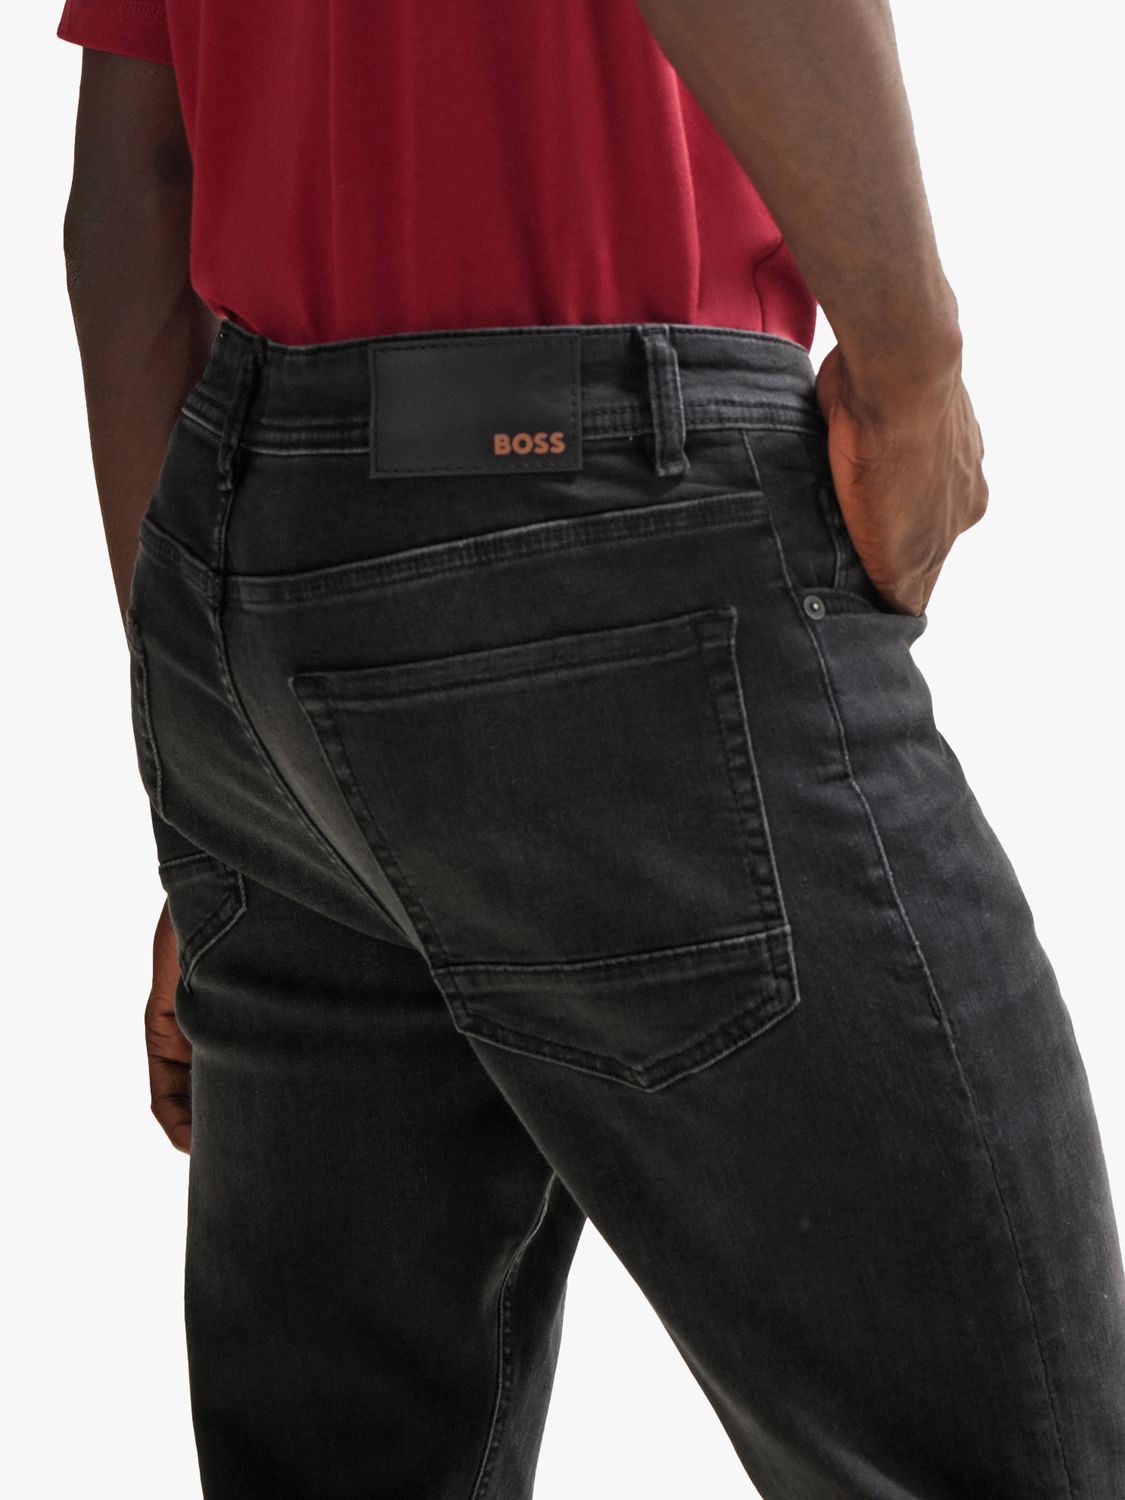 BOSS Taber Zip Tapered Jeans, Dark Grey, 38XL